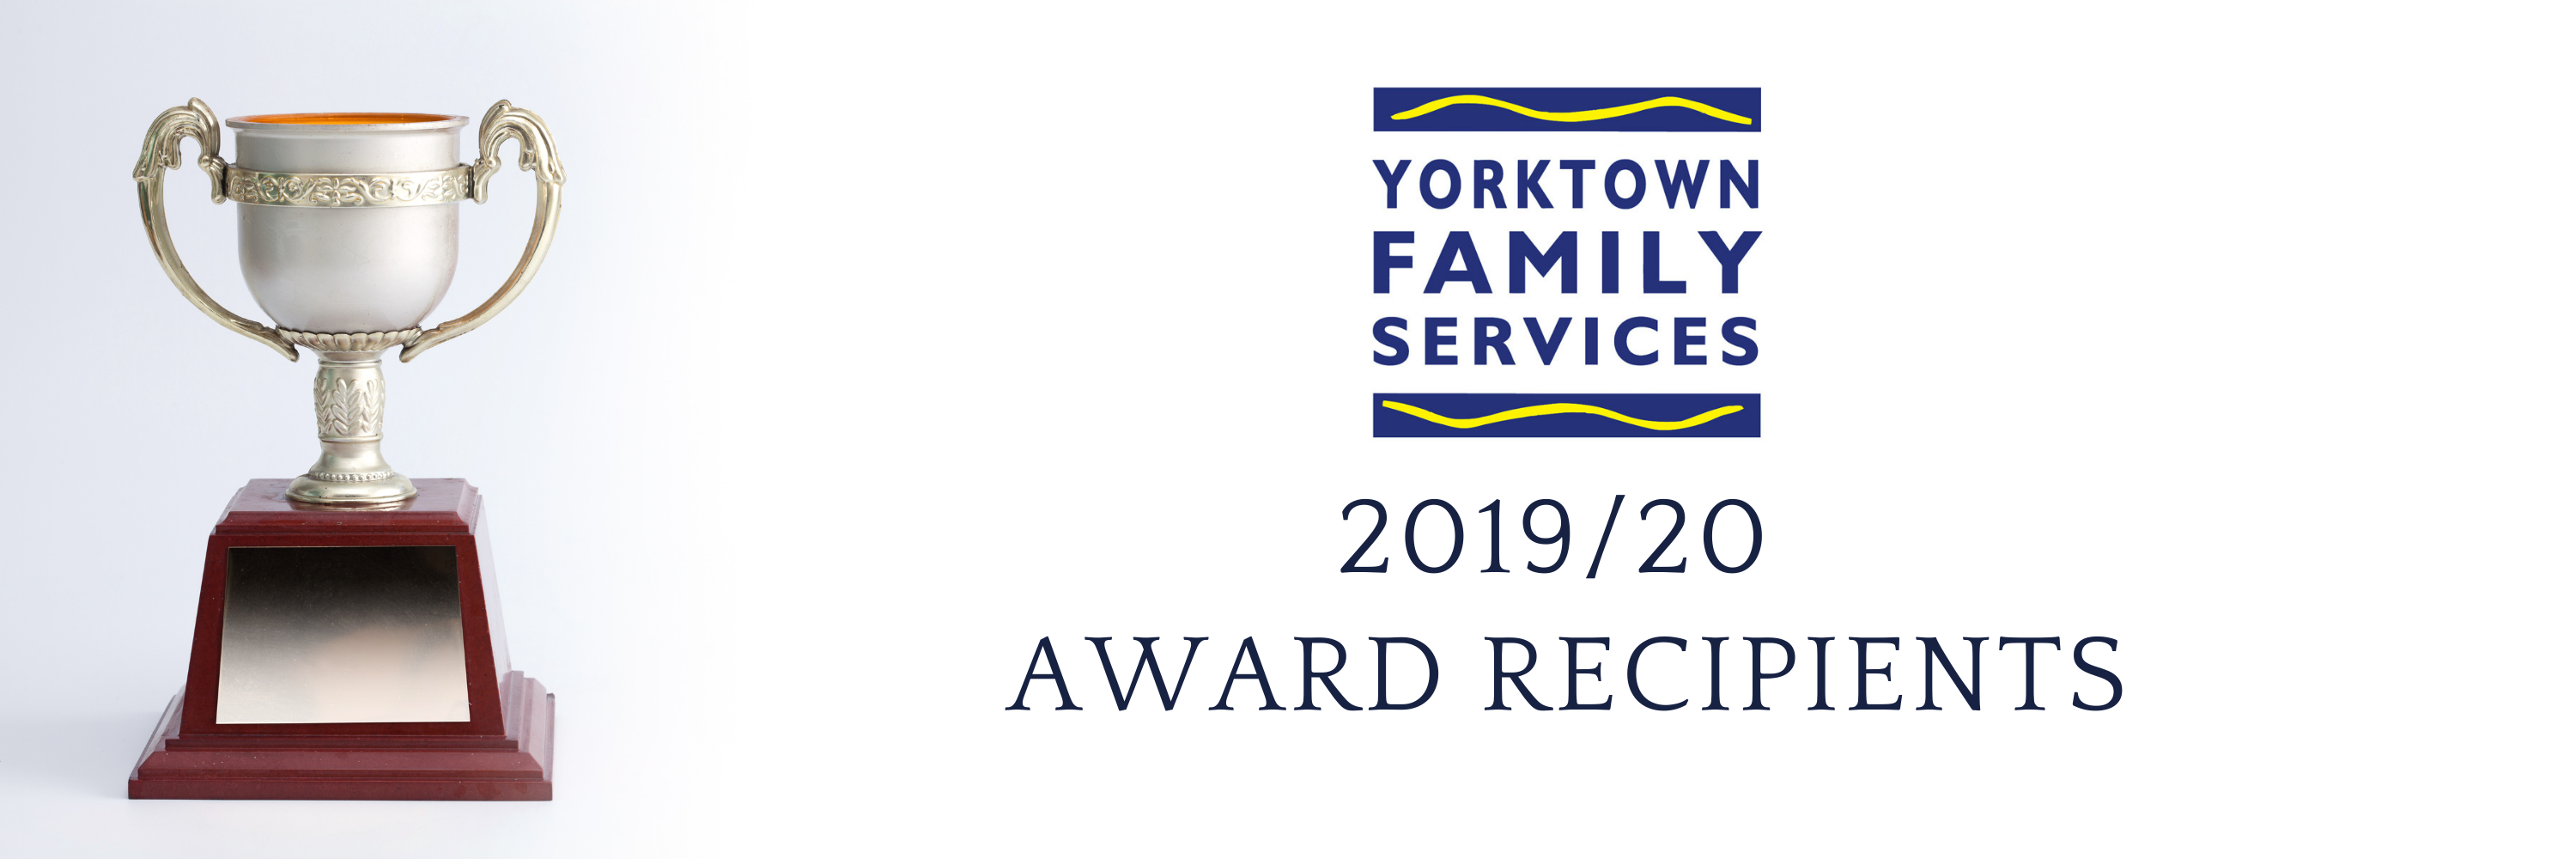 Yorktown Family Services 2019/20 Award Recipients